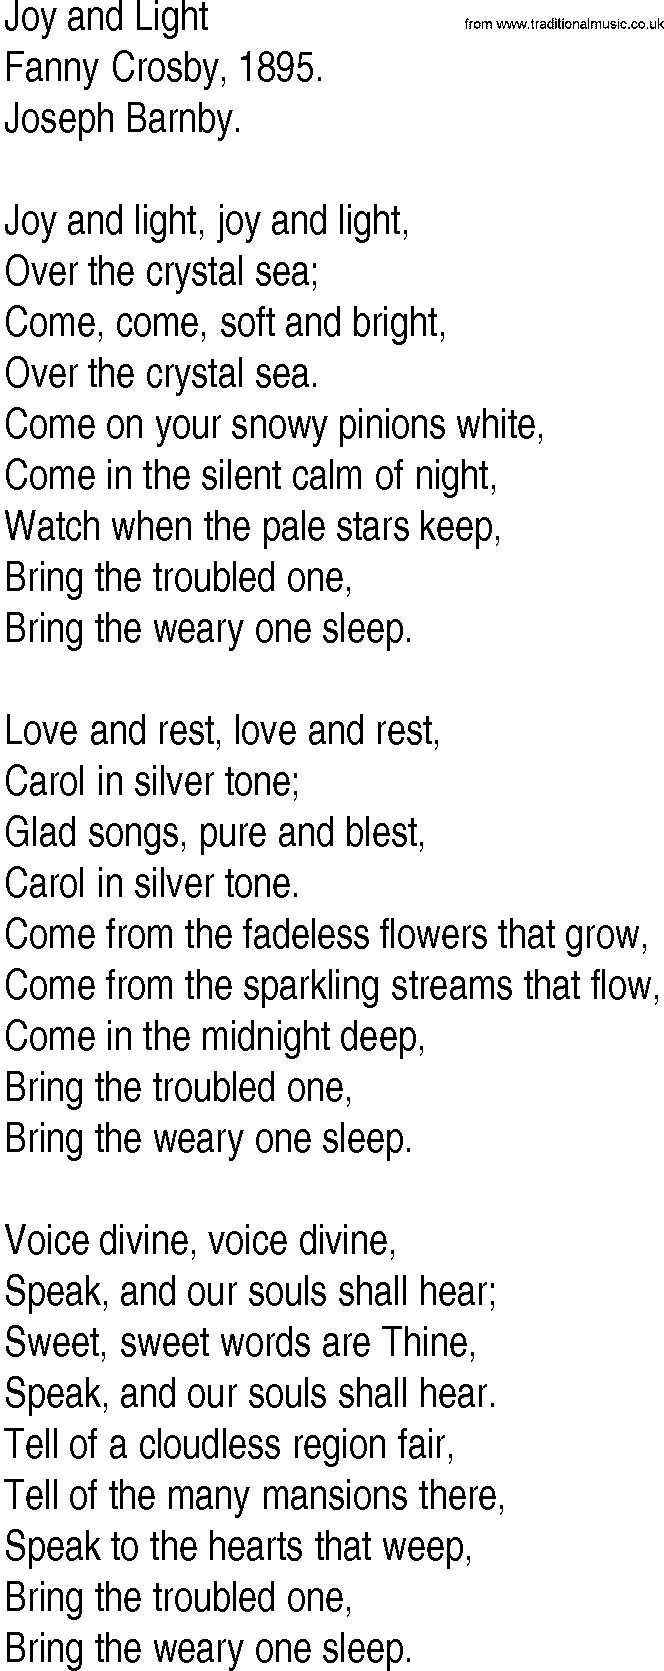 Hymn and Gospel Song: Joy and Light by Fanny Crosby lyrics